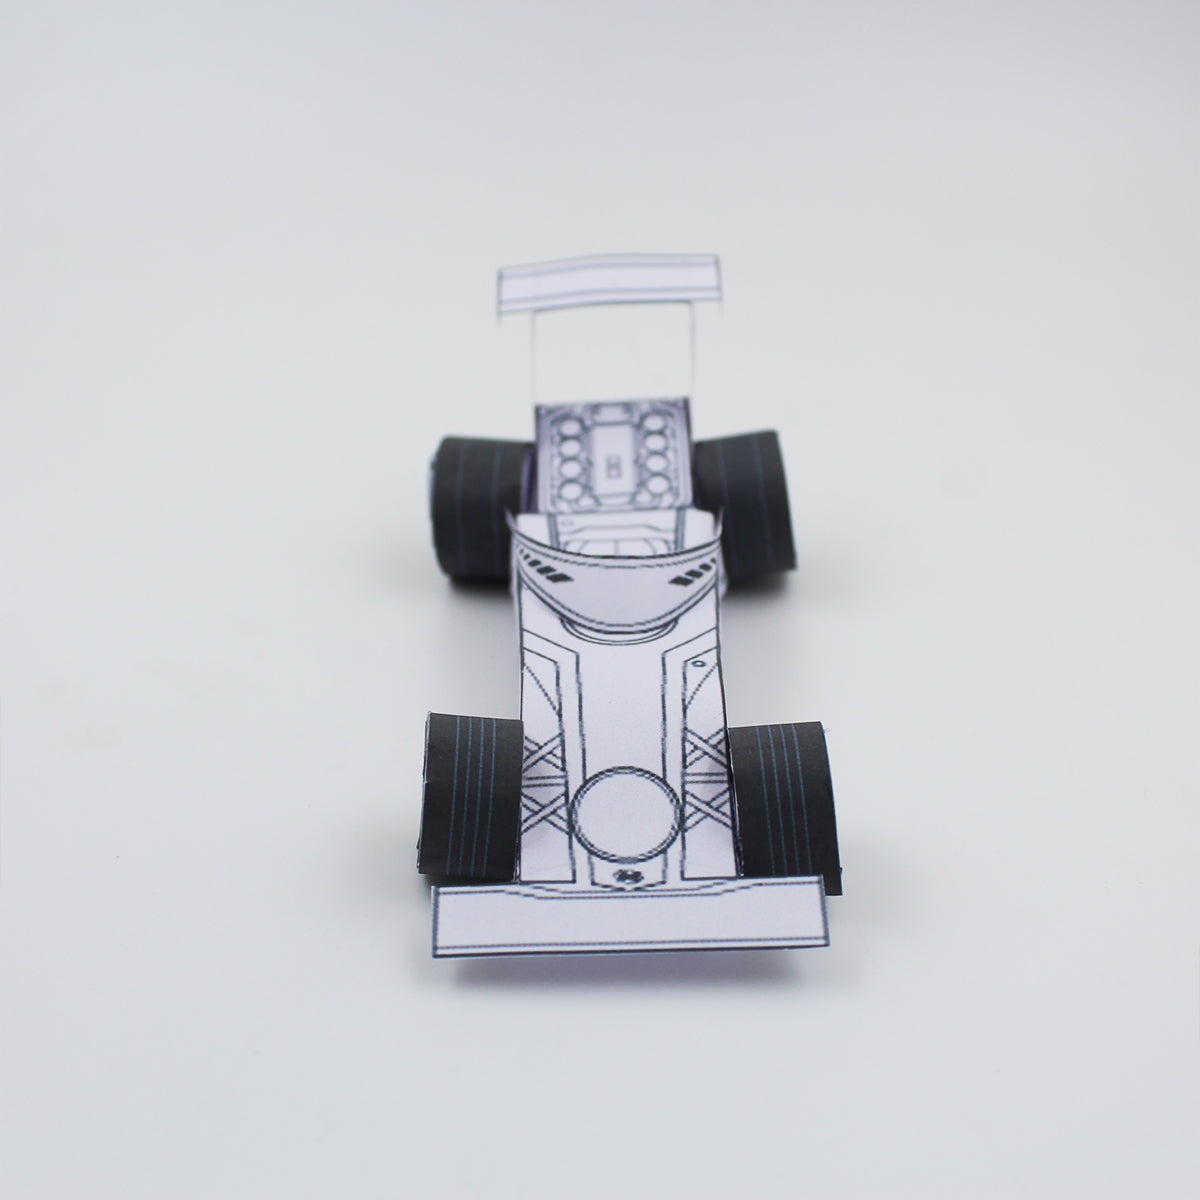 F1 Car Paper Craft Toy